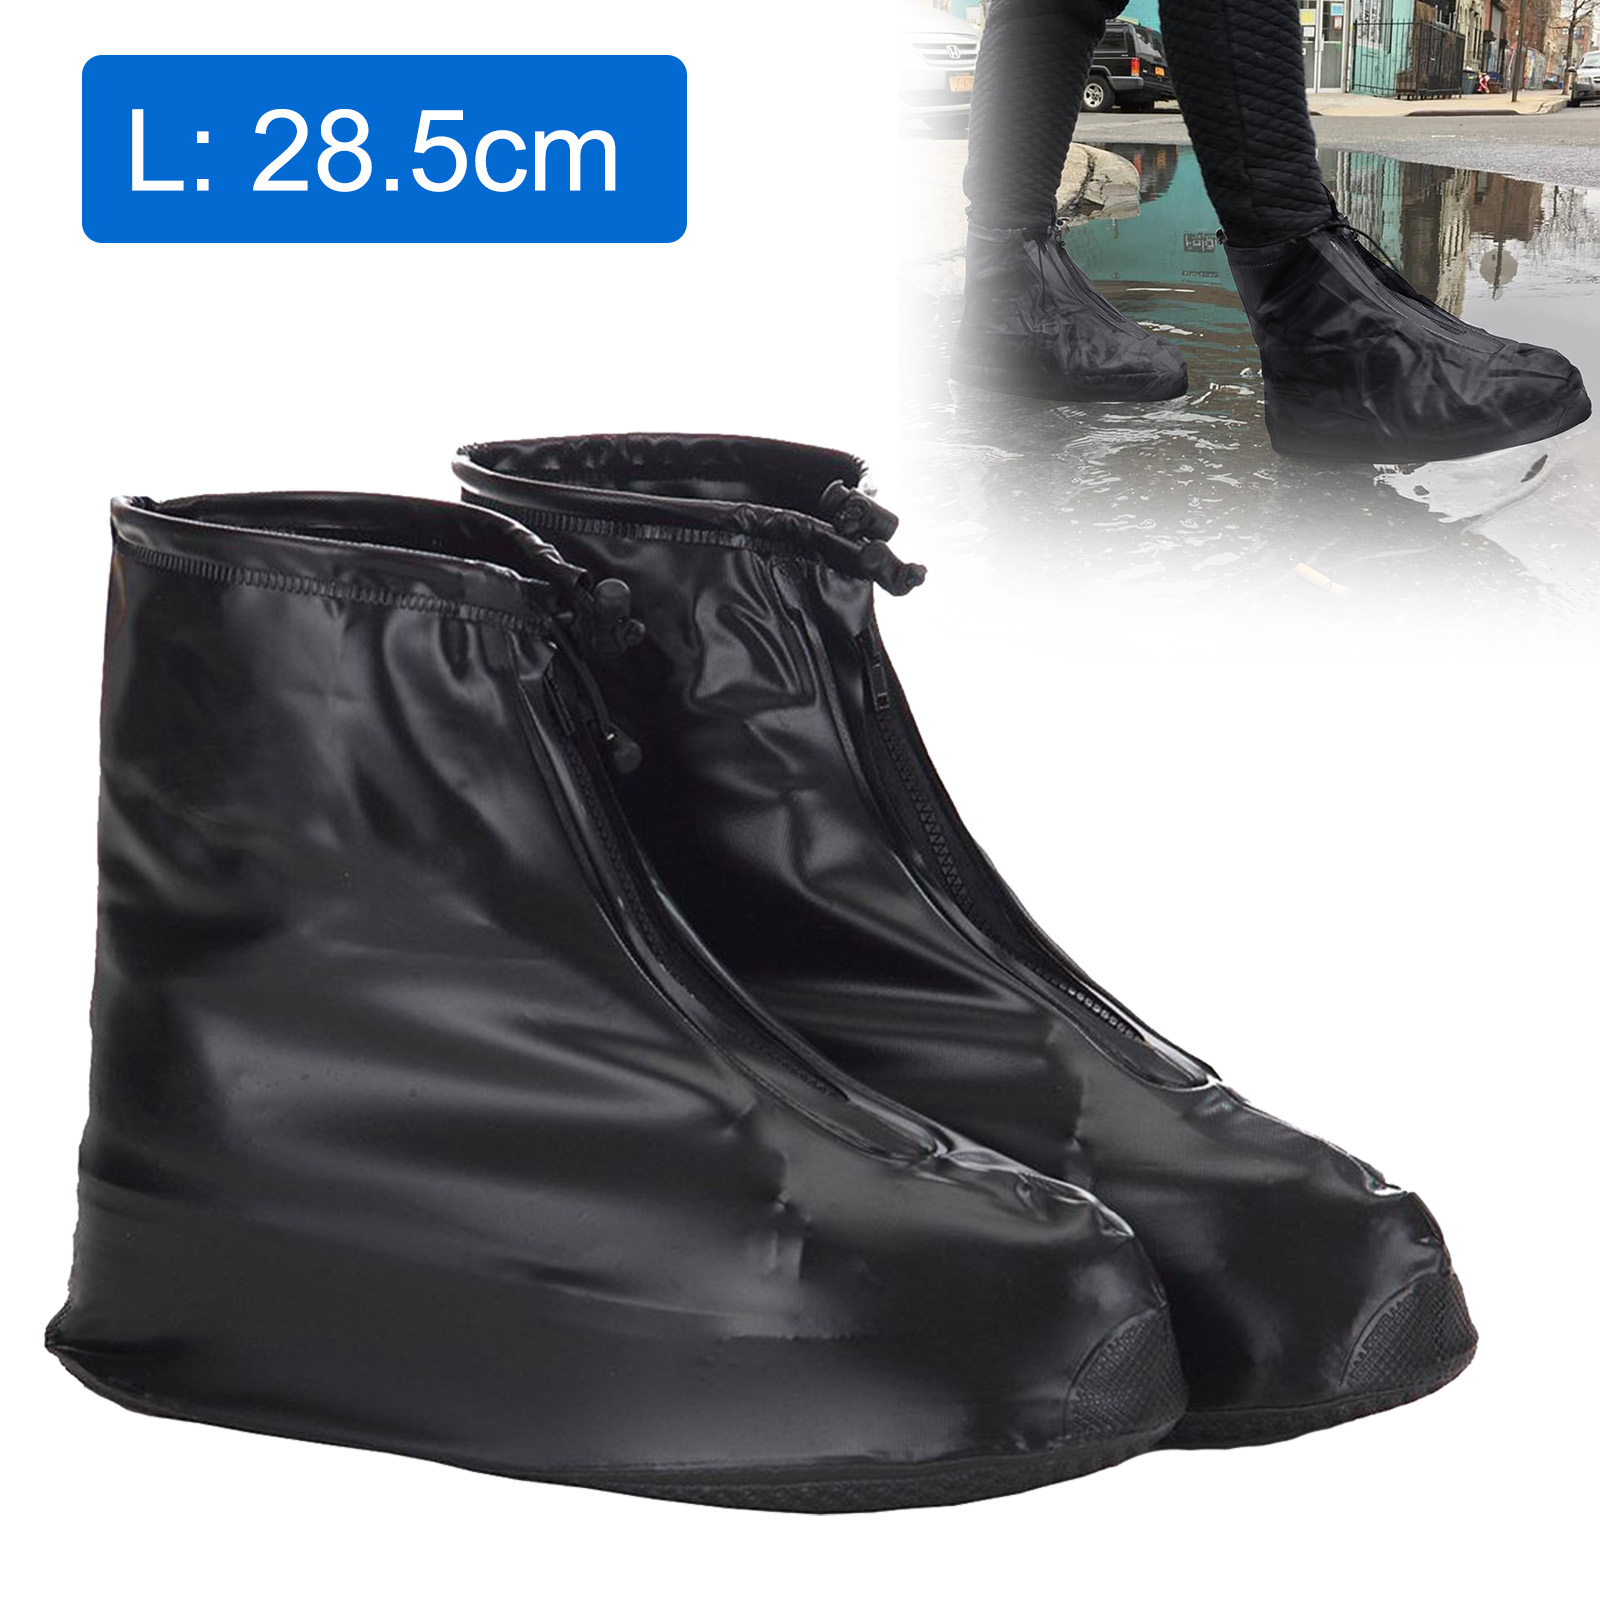 Reusable Rain Shoe Waterproof Covers Anti-slip Unisex Overshoes Boots S-XXL